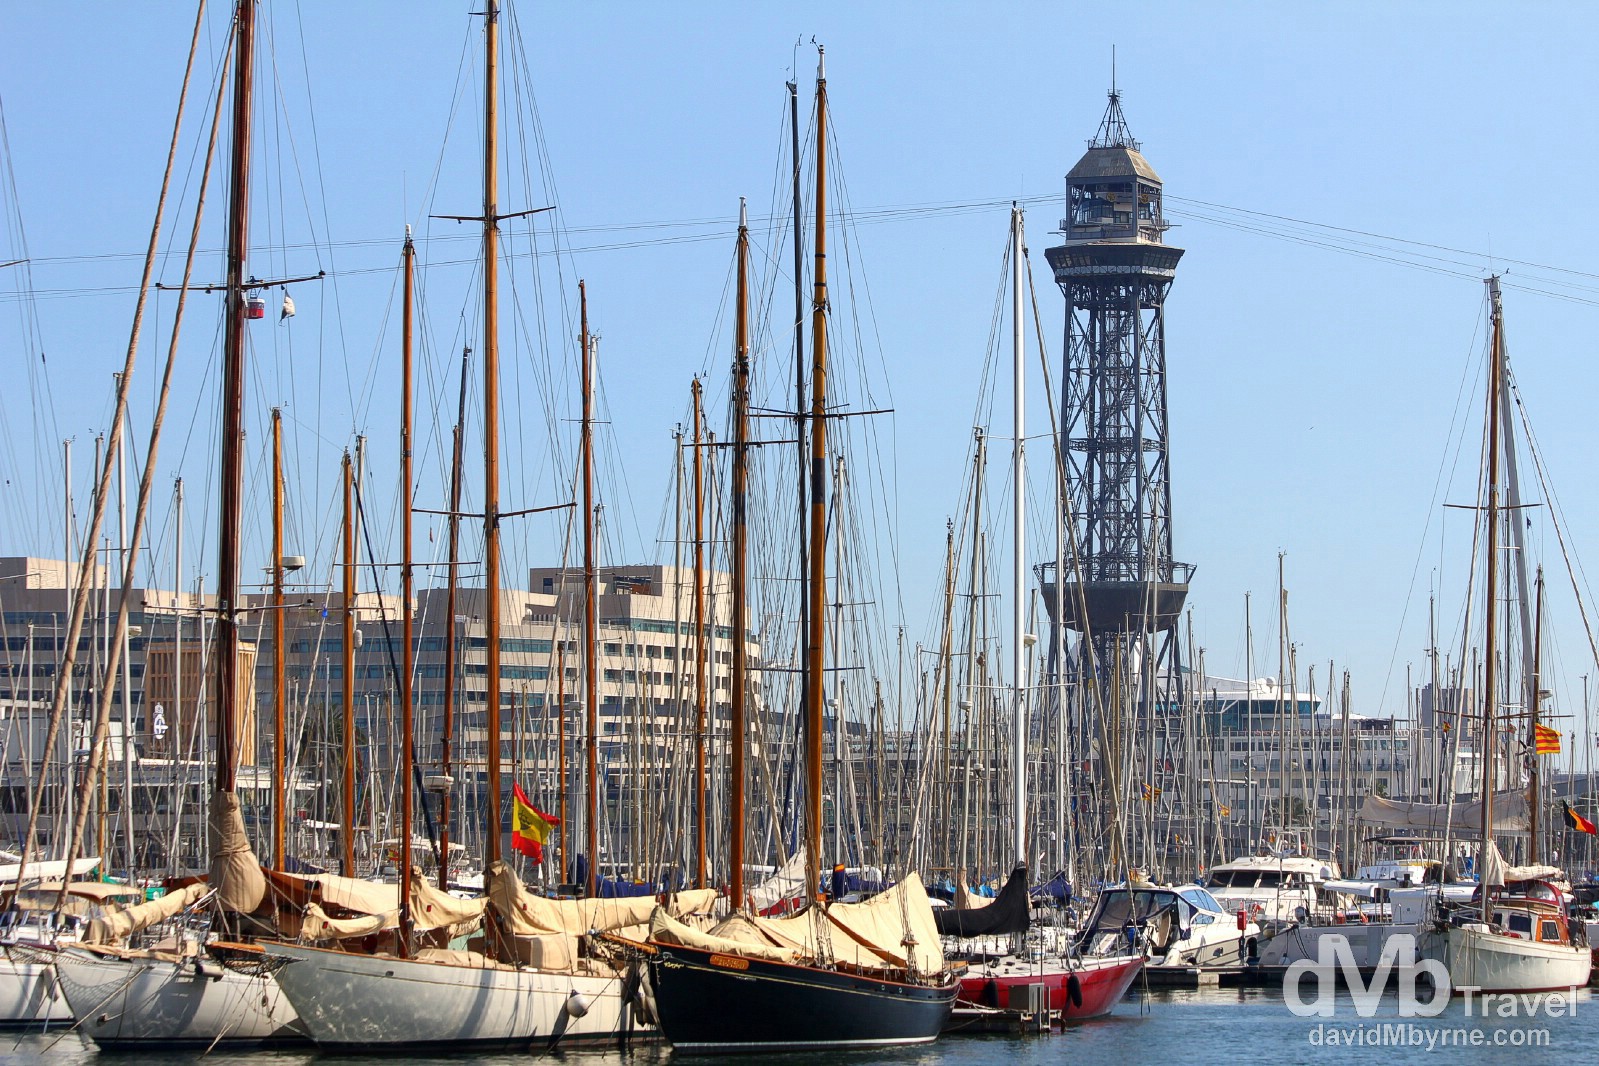 Port de Barcelona, Barcelona, Spain. June 16th, 2014.